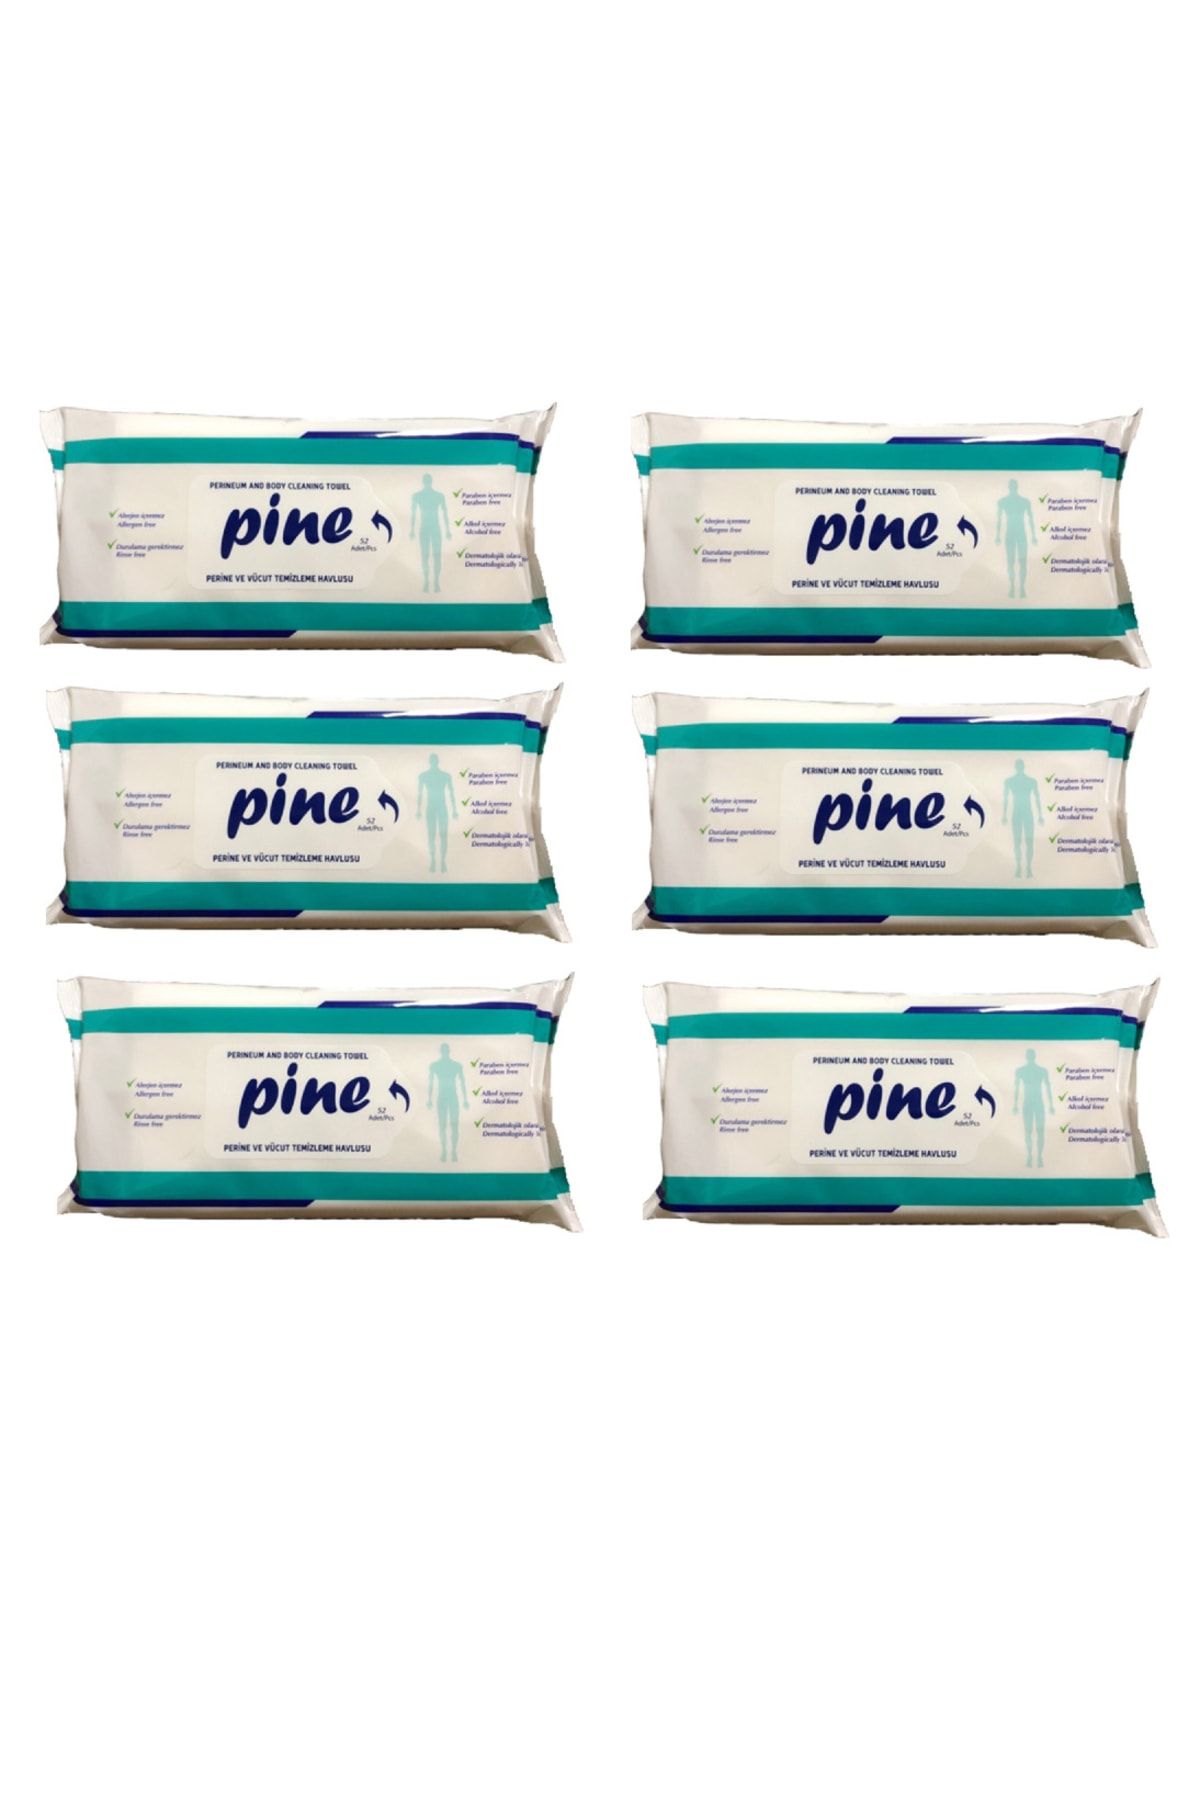 Pine Perine Ve Vücut Temizleme Havlusu 52li 6 Paket